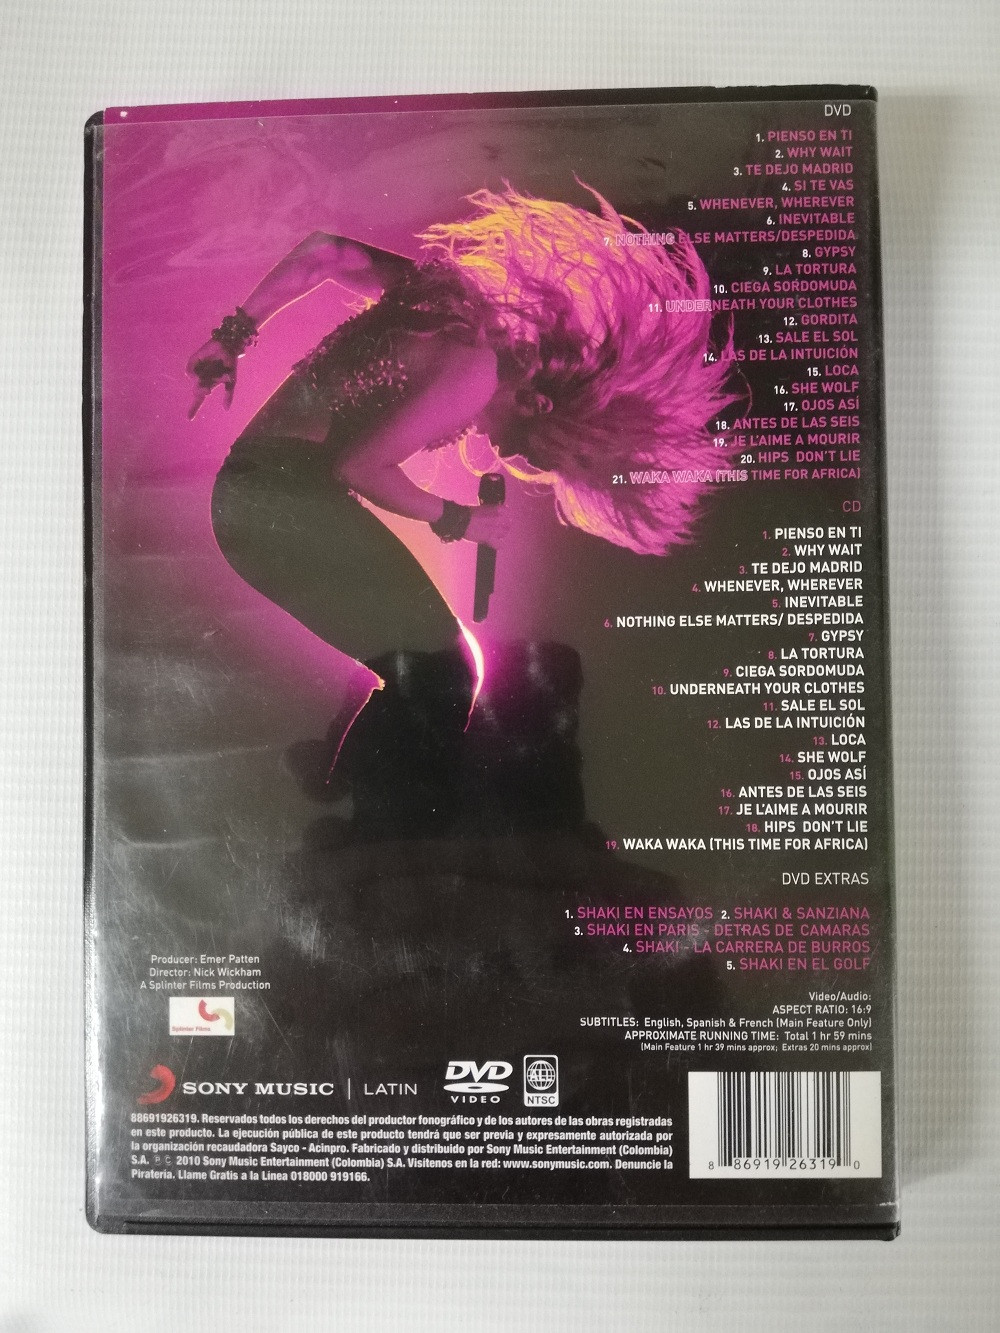 Imagen CD + DVD SHAKIRA - EN VIVO DESDE PARIS 2